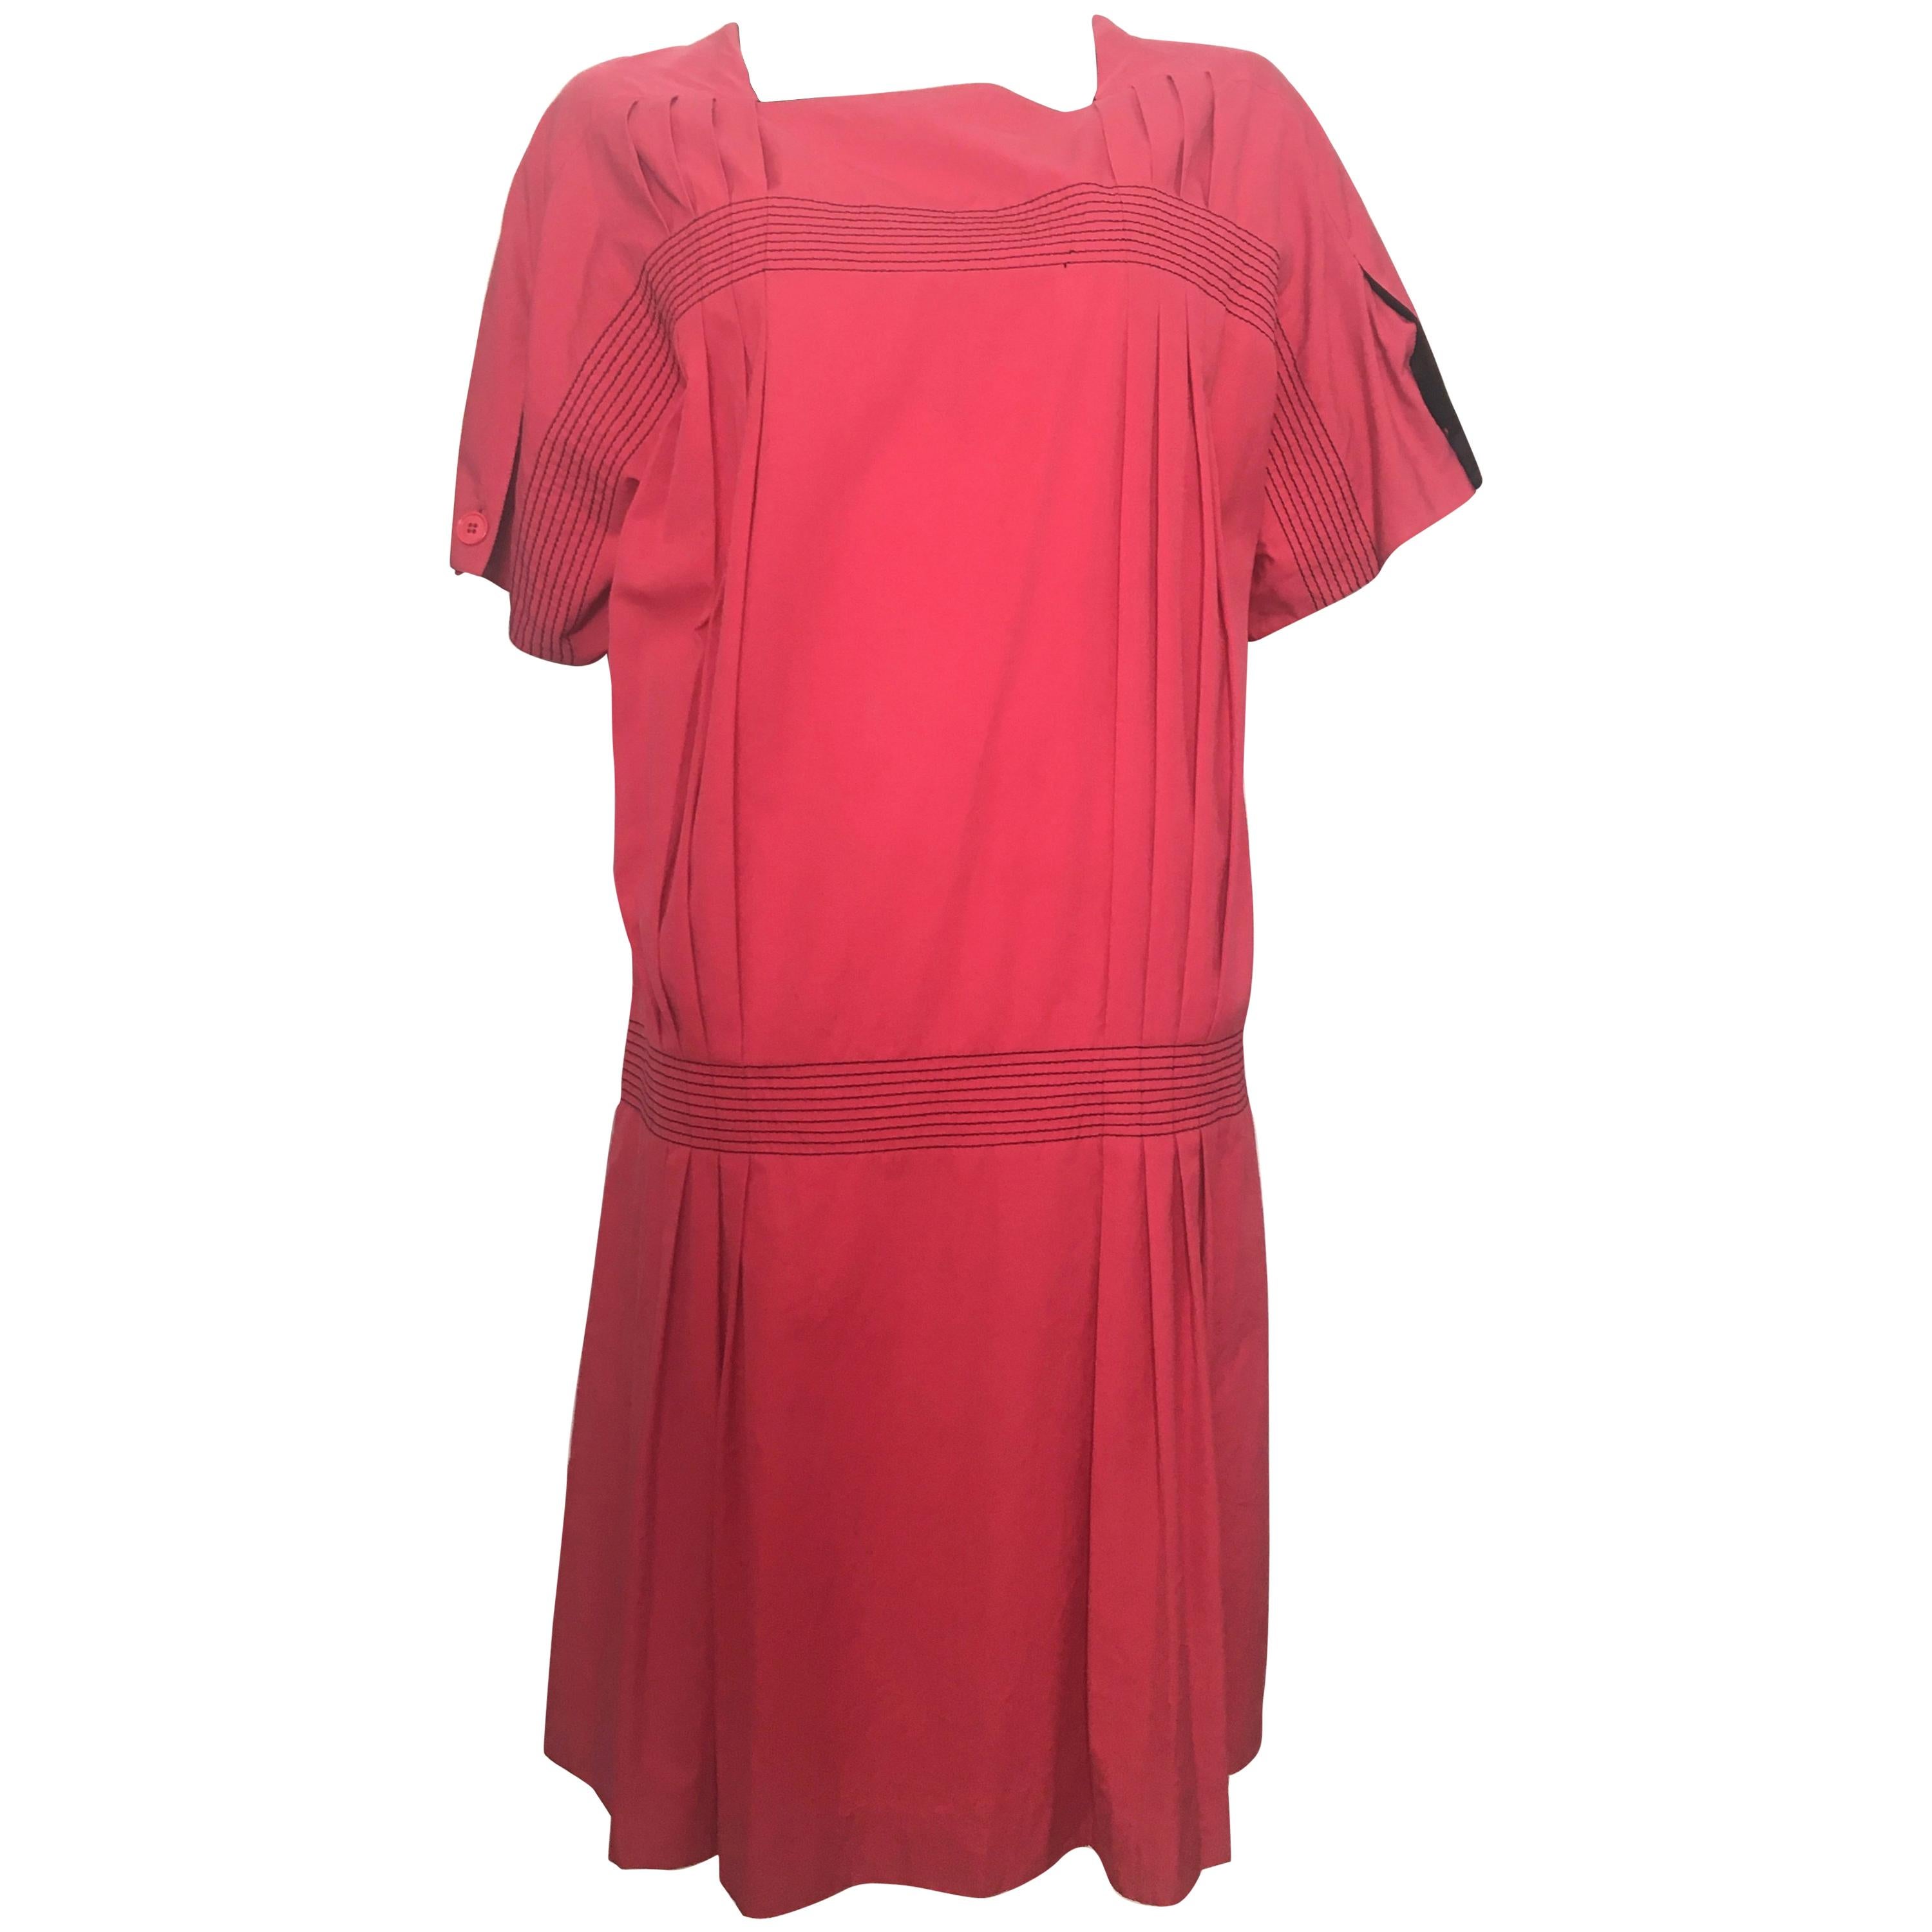 Gianfranco Ferre 1980s Cotton Loose Cut Dress Size 6 / 8. For Sale